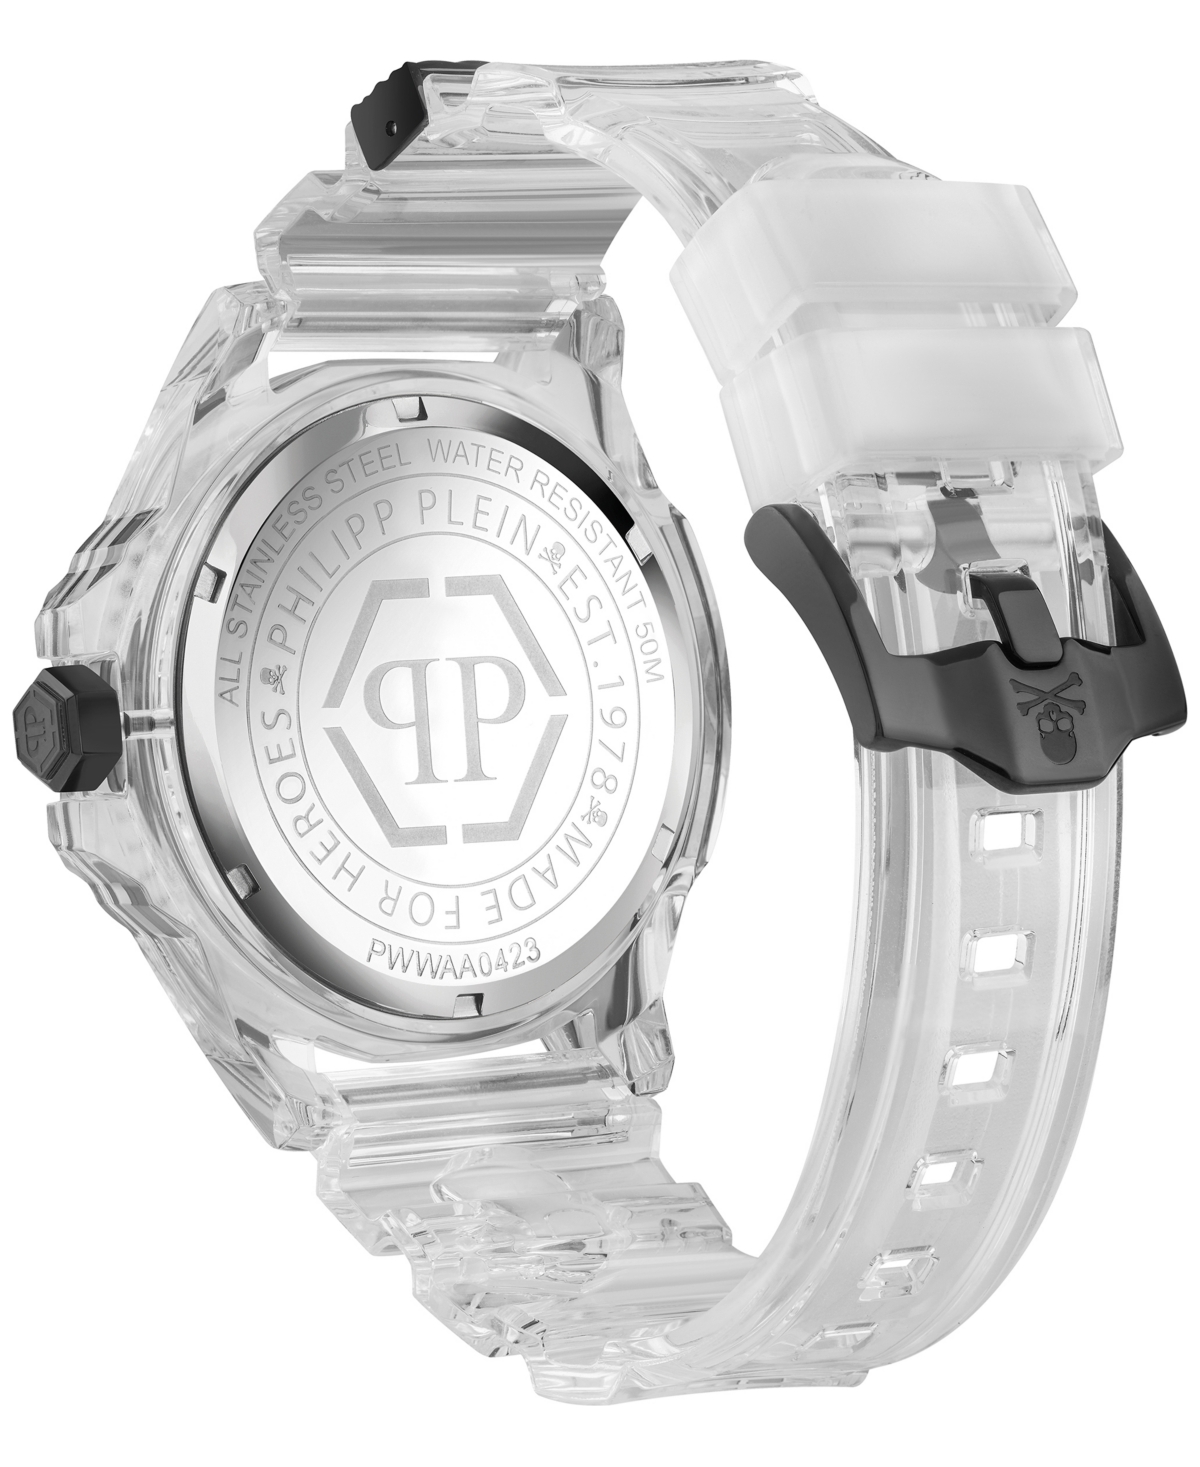 Shop Philipp Plein Men's The $kull Transparent Silicone Strap Watch 45mm